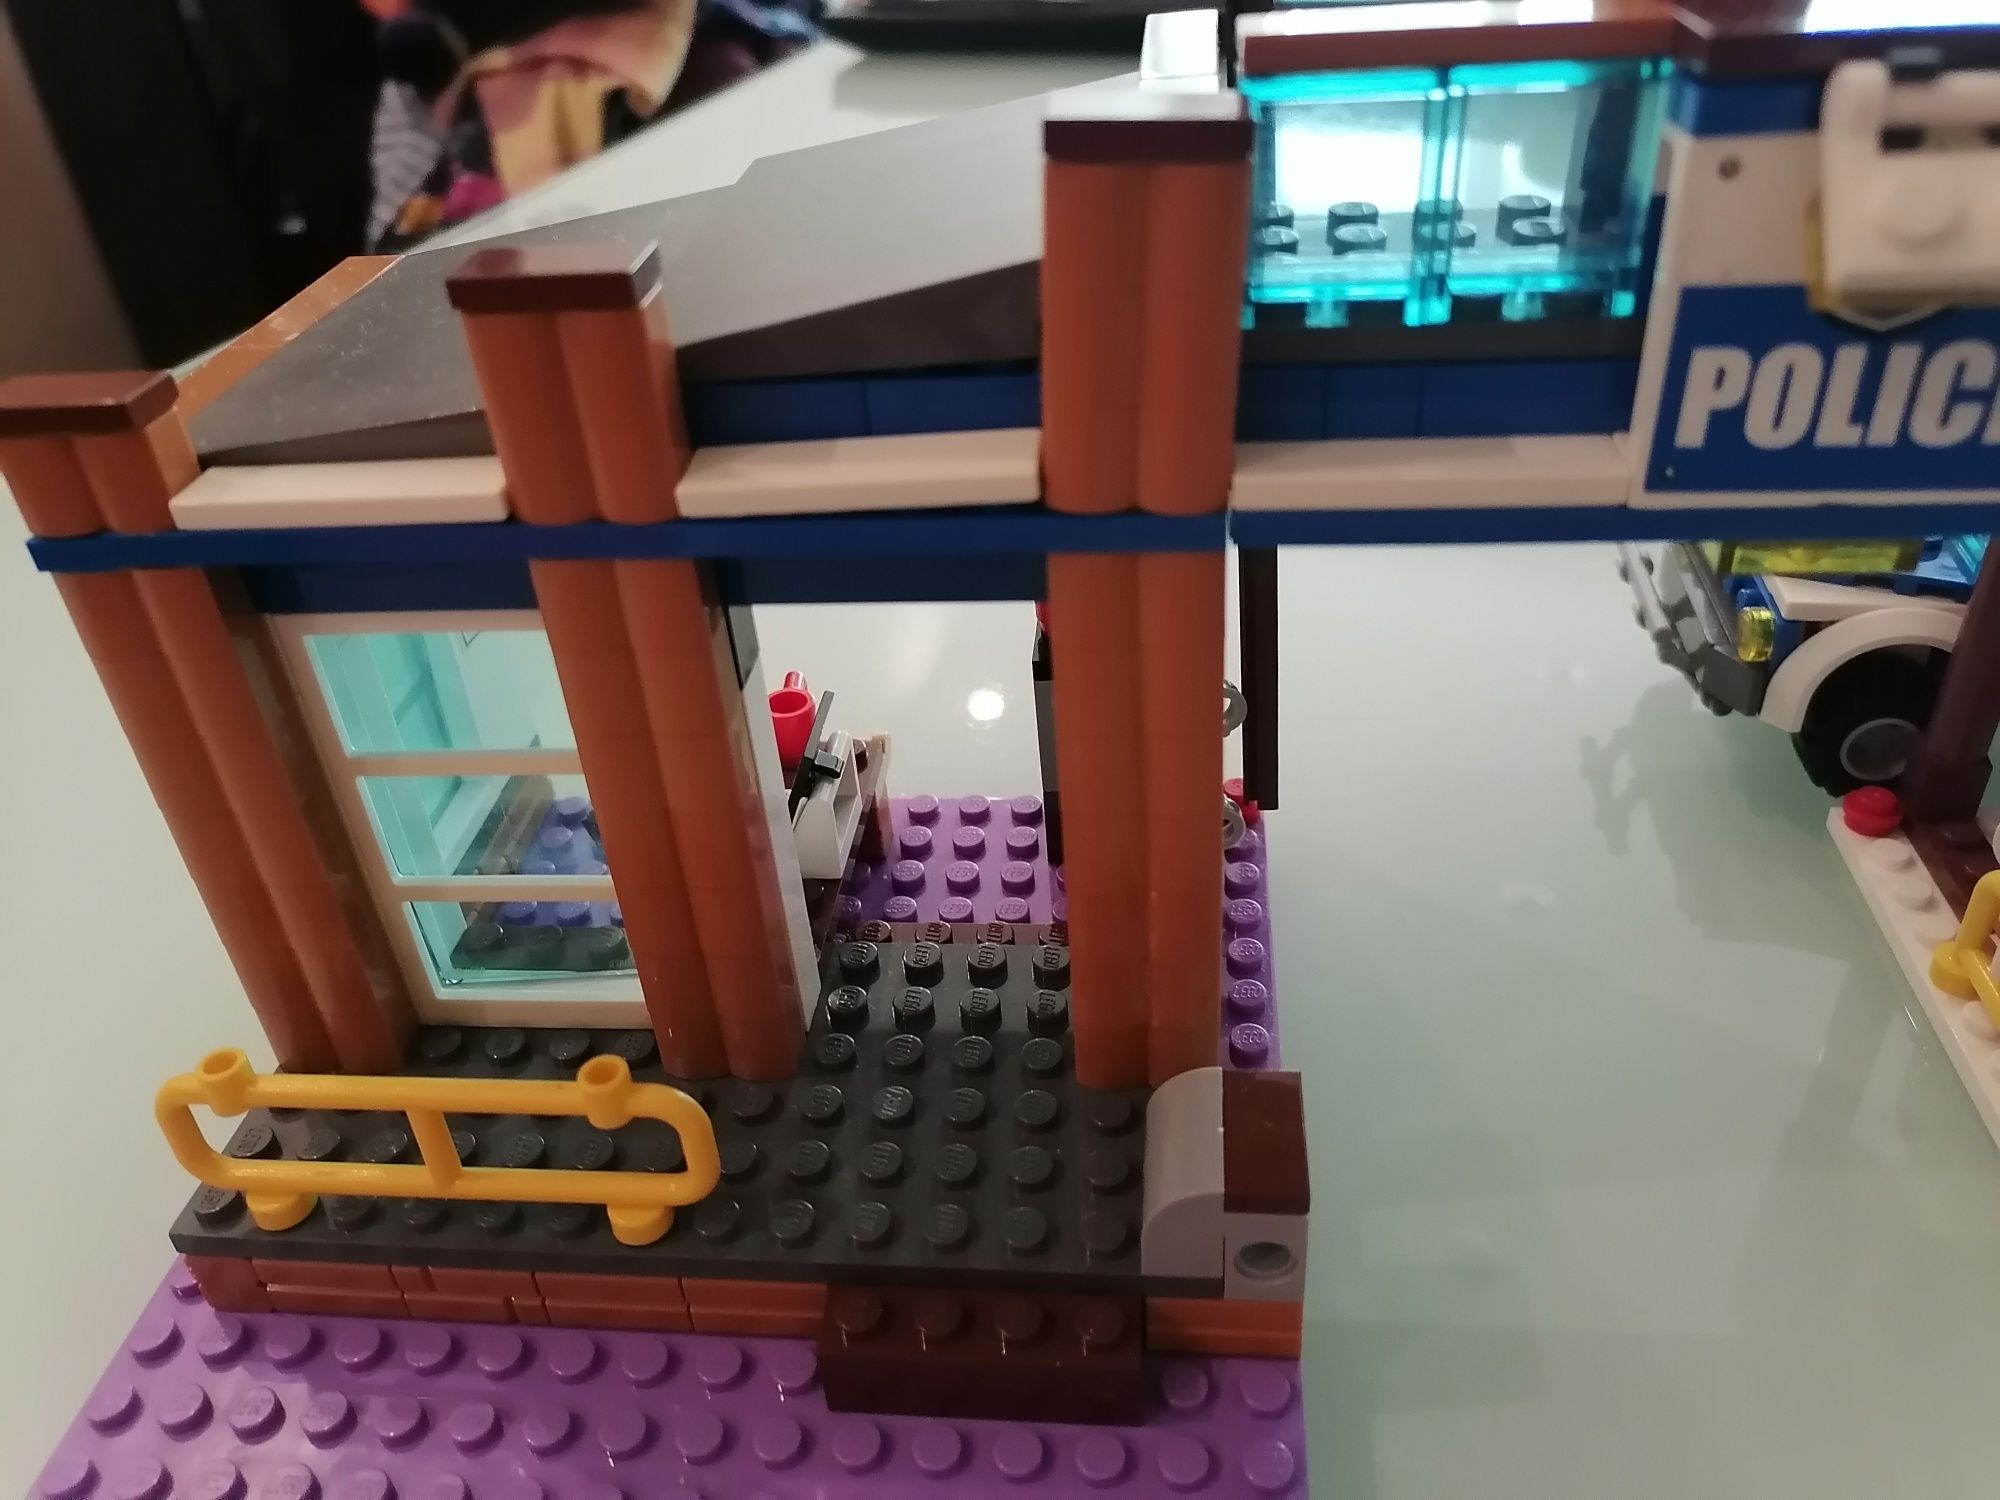 Lego City 4440 - Горска полиция